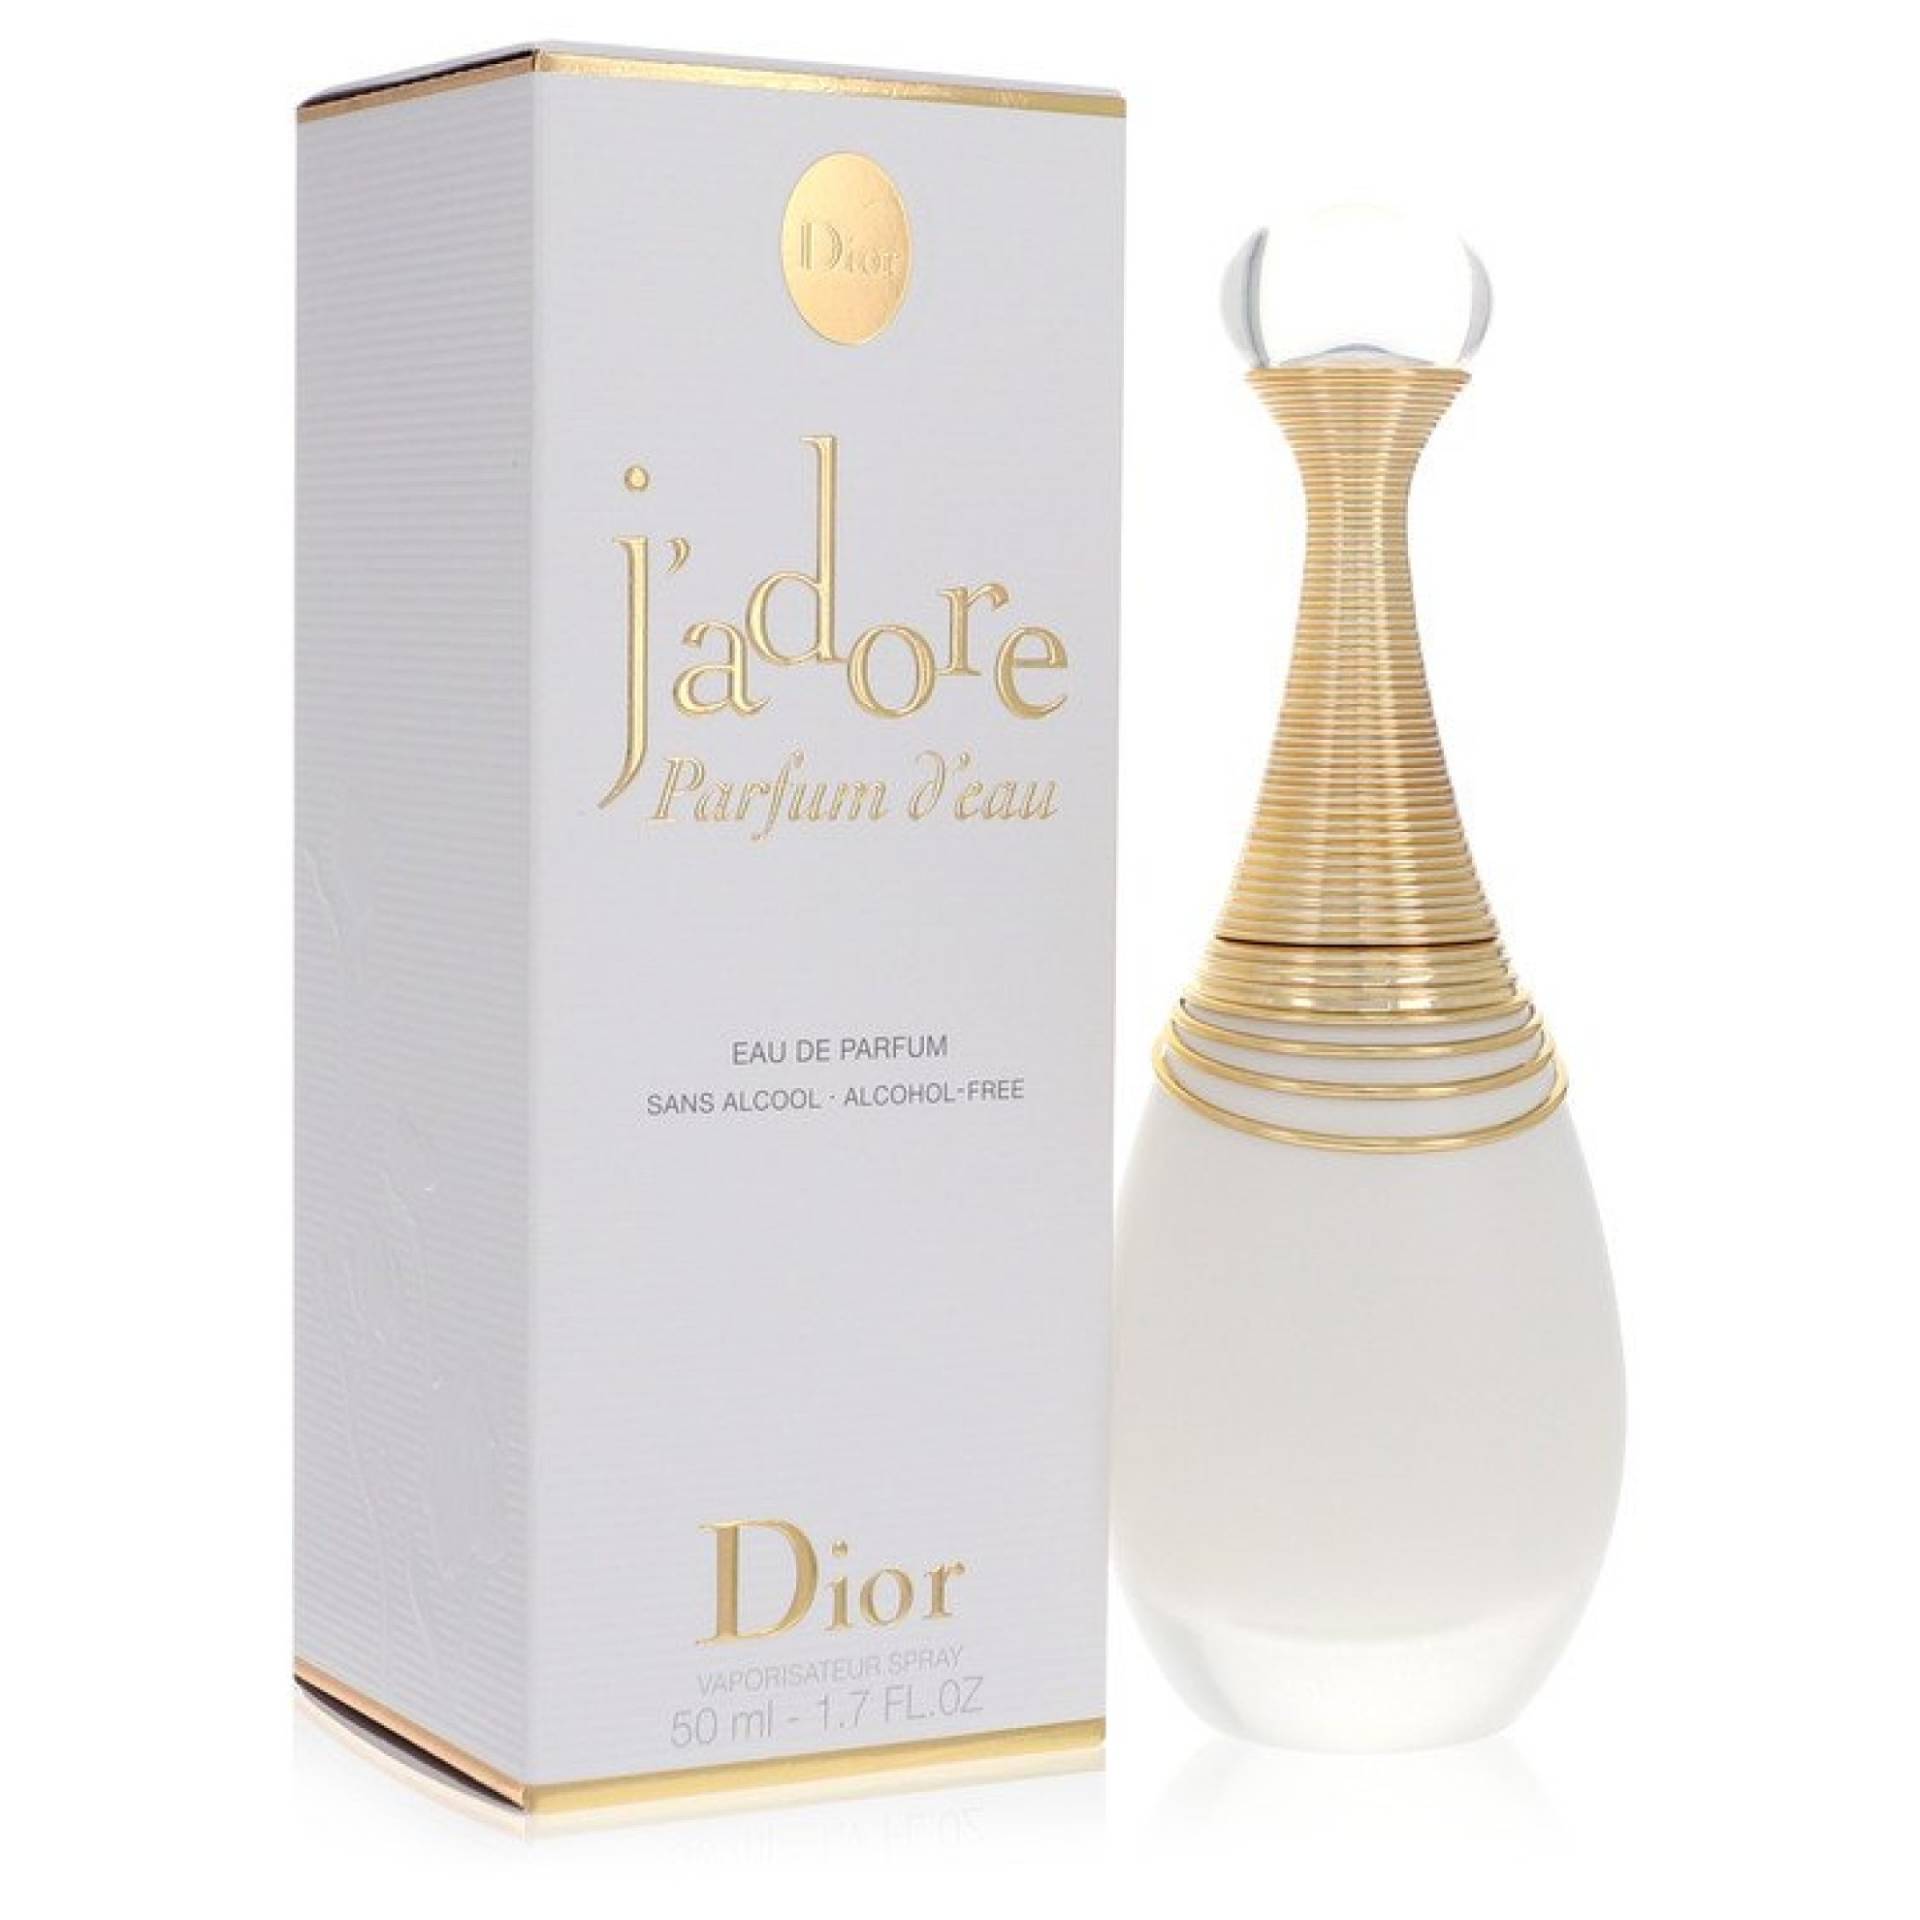 Christian Dior Jadore Parfum D'eau Eau De Parfum Spray 50 ml von Christian Dior